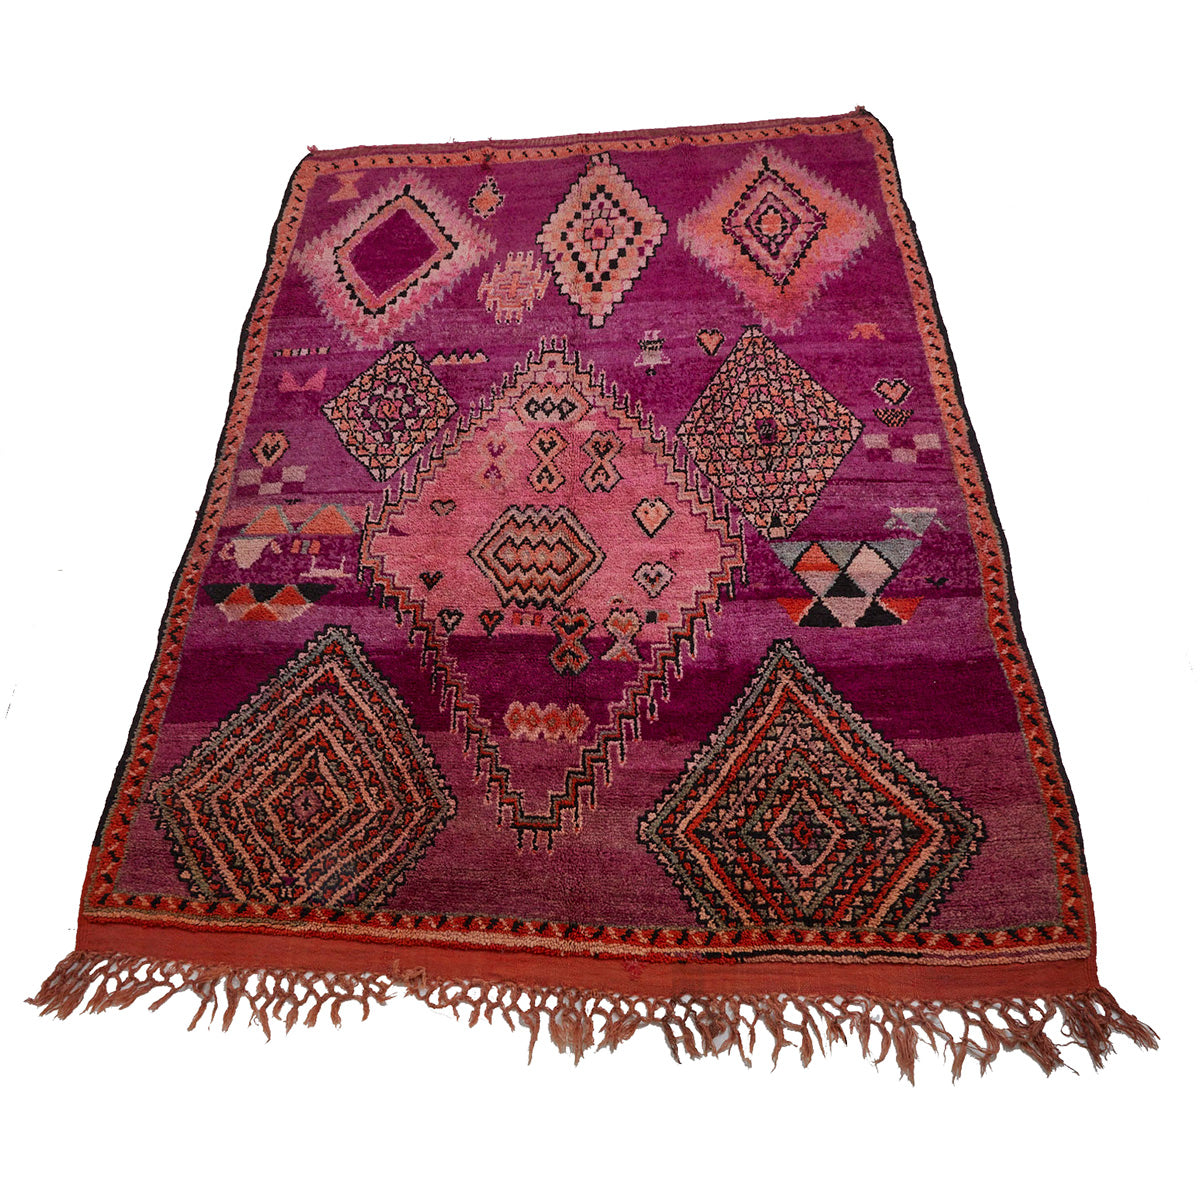 Modern Moroccan diamond rug in shades of pink and purple - Kantara | Moroccan Rugs